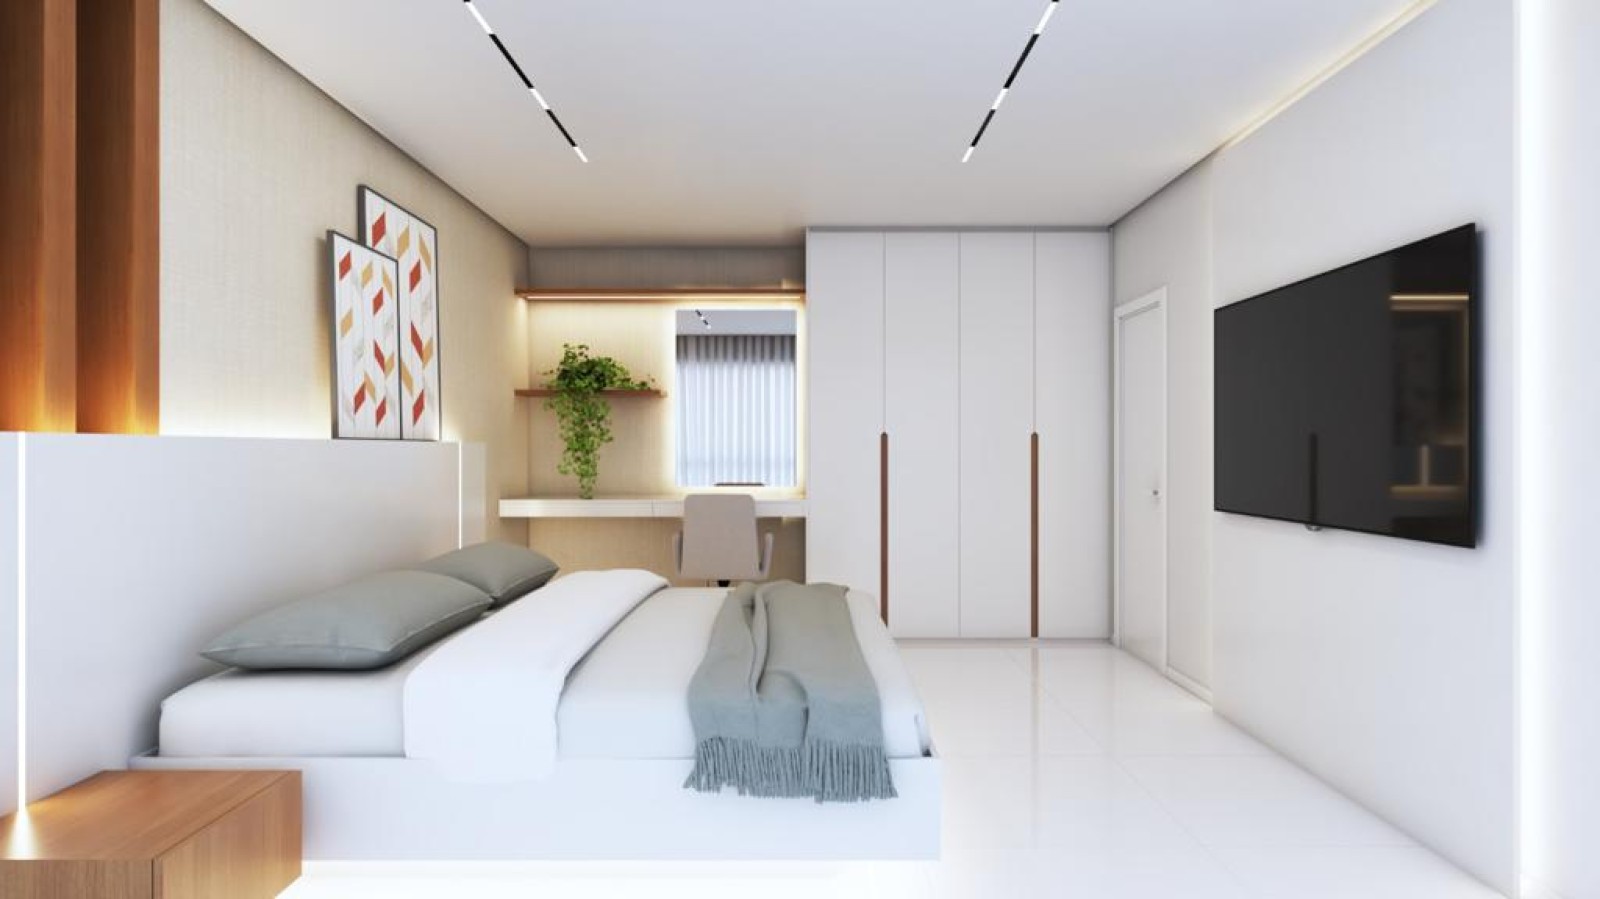 3 Bedroom Luxury House, for sale, in Portimão, Algarve_224625